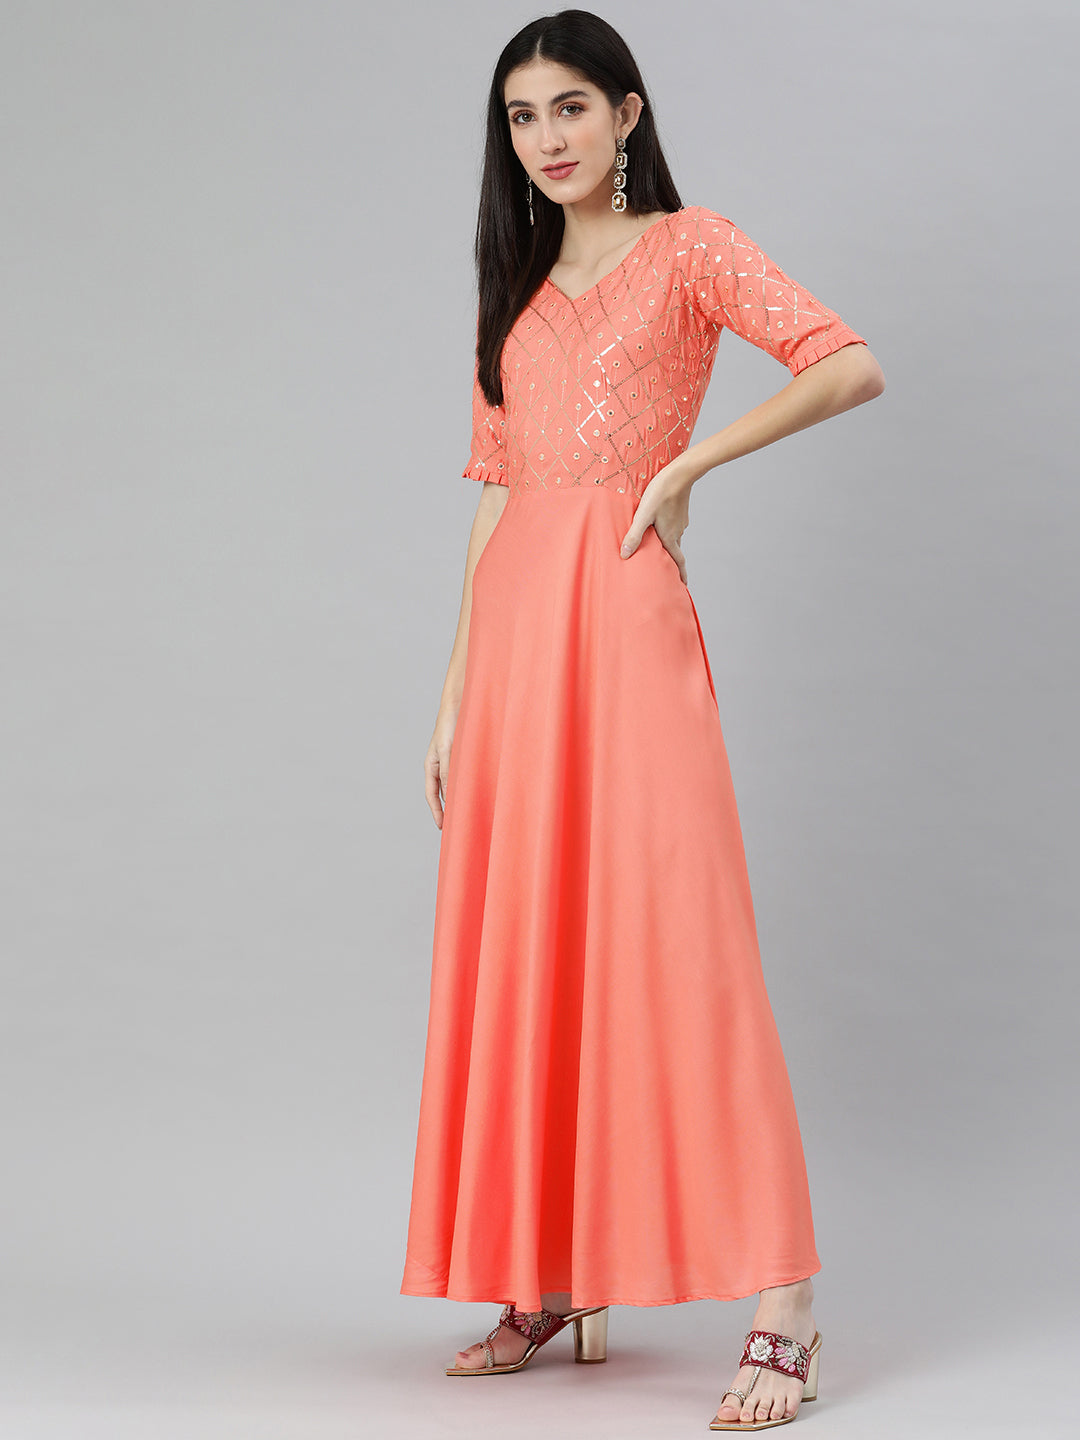 A Lady Like You Maxi Dress Peach - Small | Peach maxi dresses, Casual  wedding outfit, Maxi dress